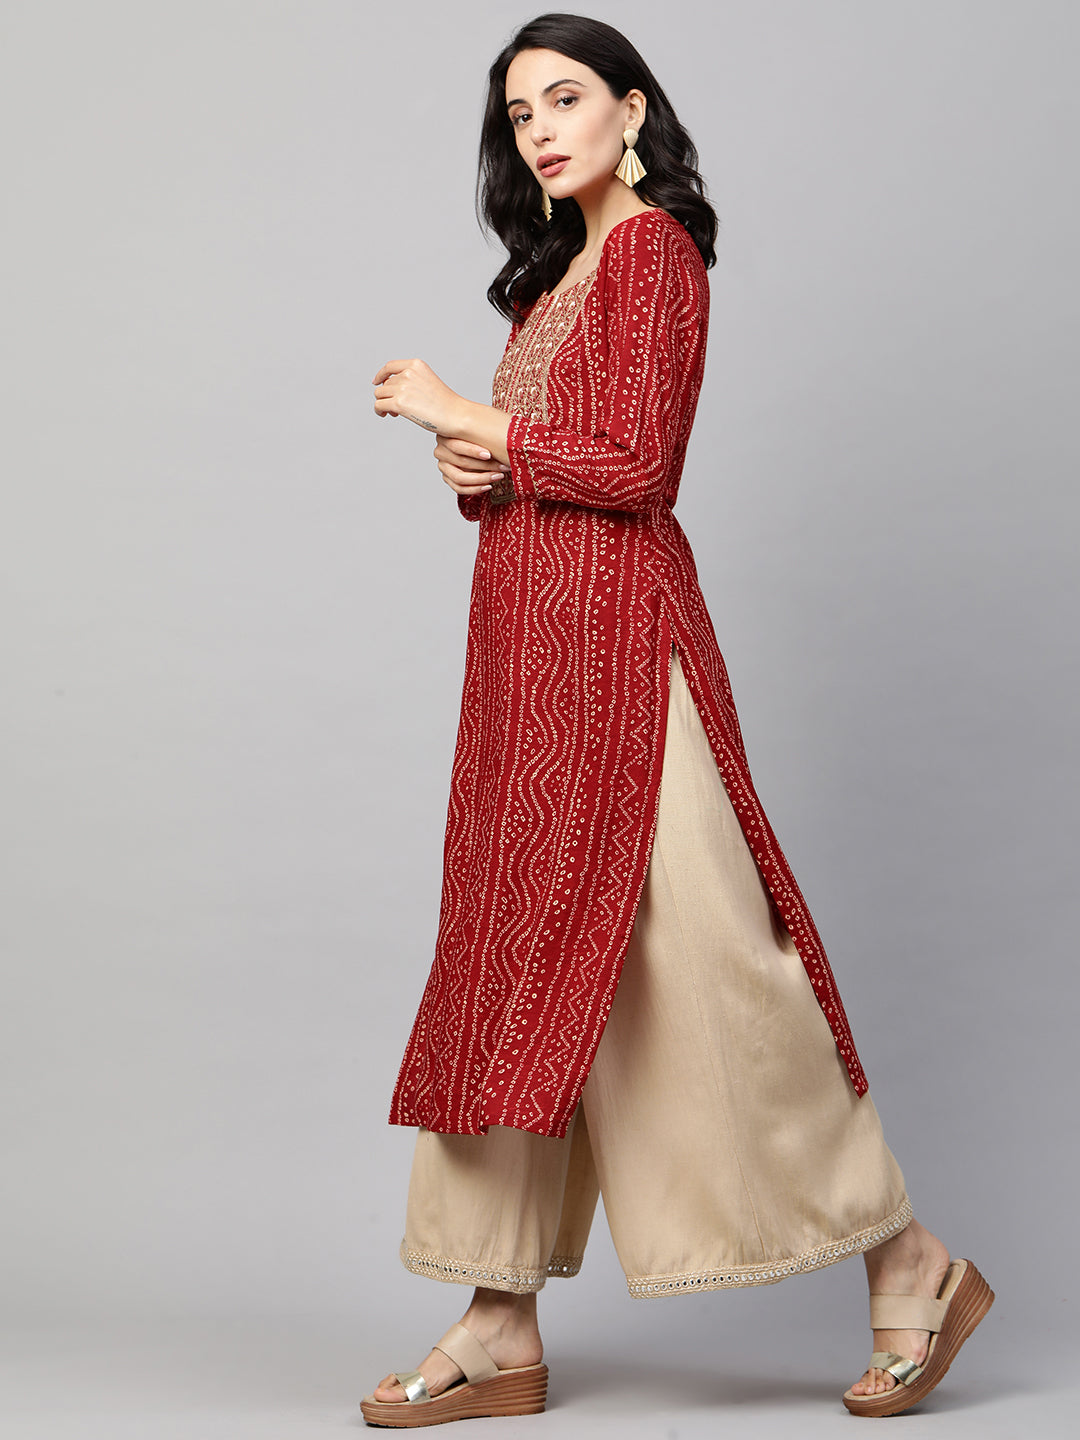 Bandhani Printed & Sequin Embroidered Straight Kurta - Red